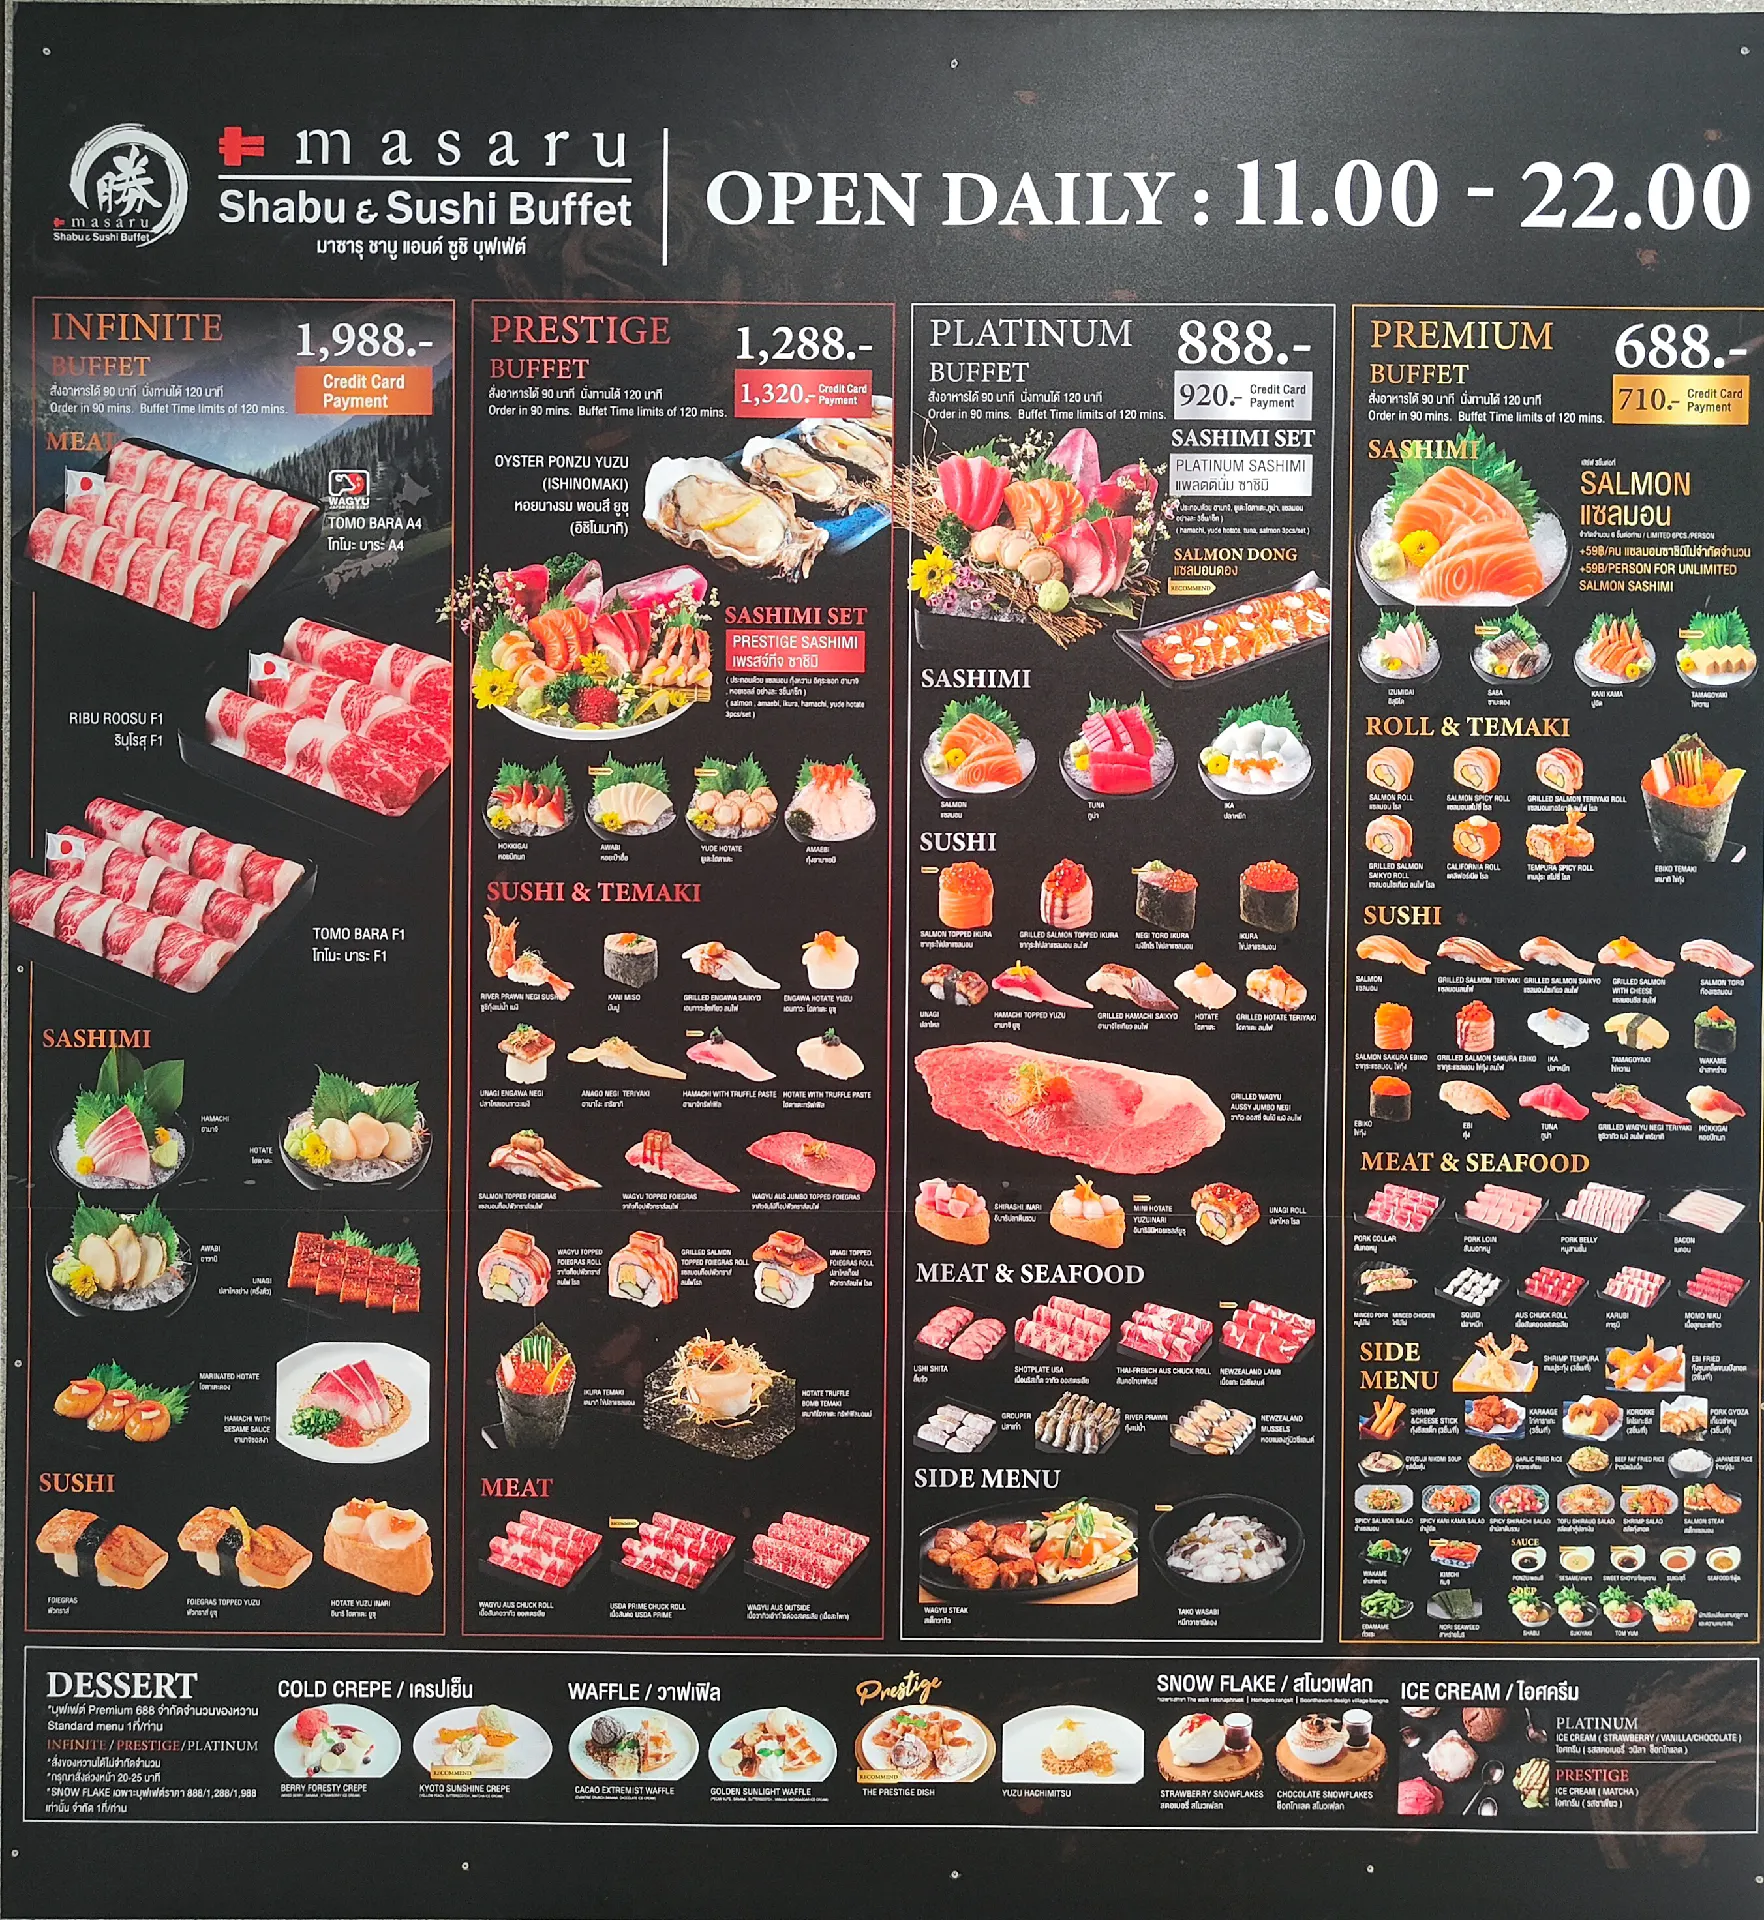 KTC Credit Card Promotion at Okami Sushi